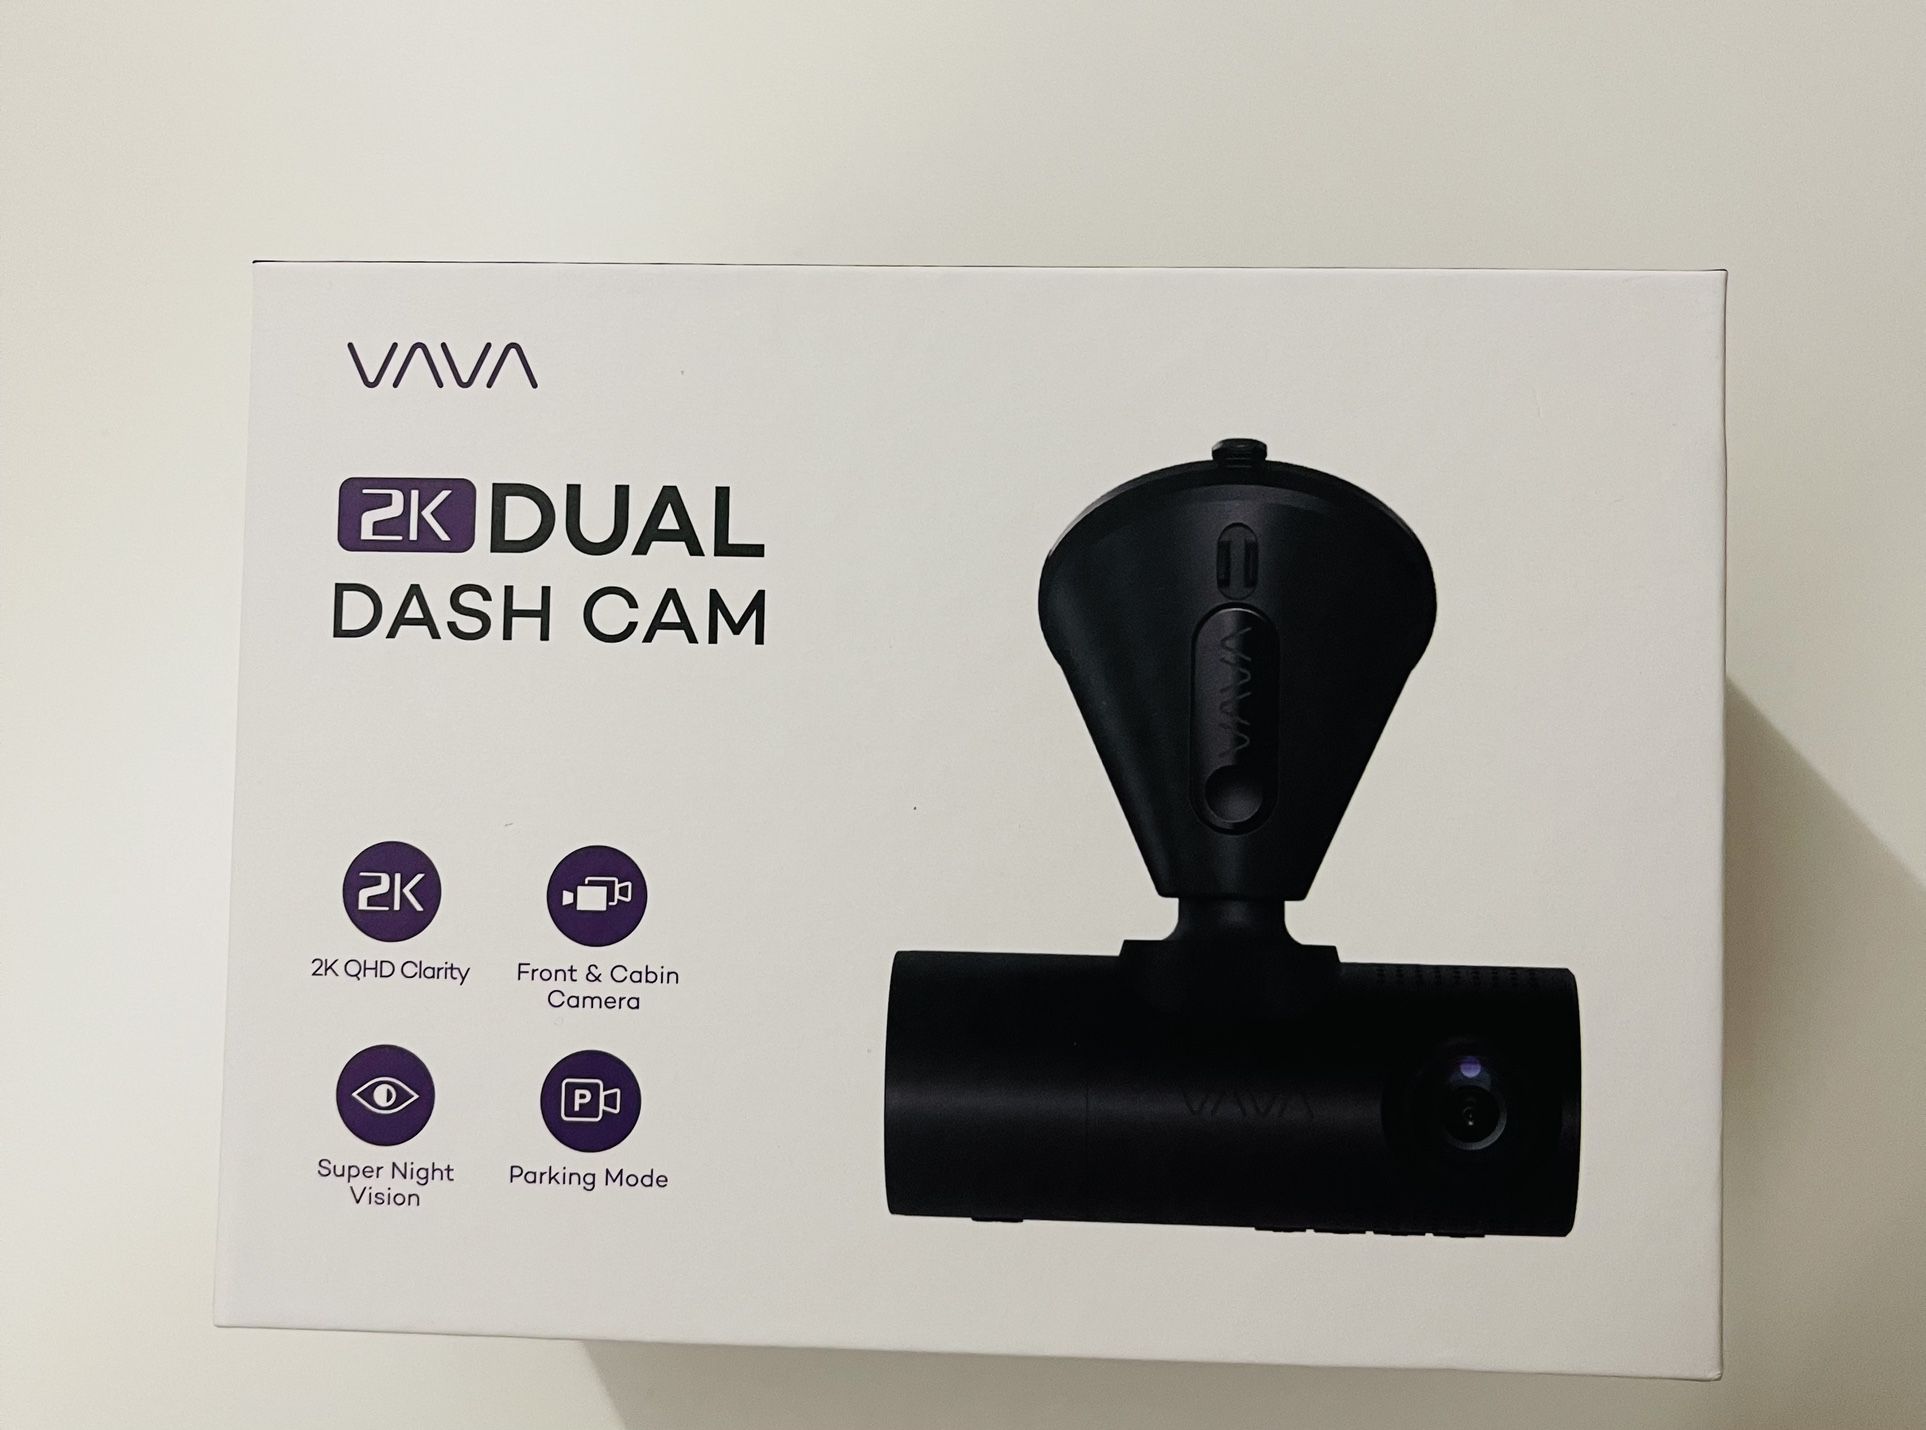 VAVA 2K Dual Dash Cam